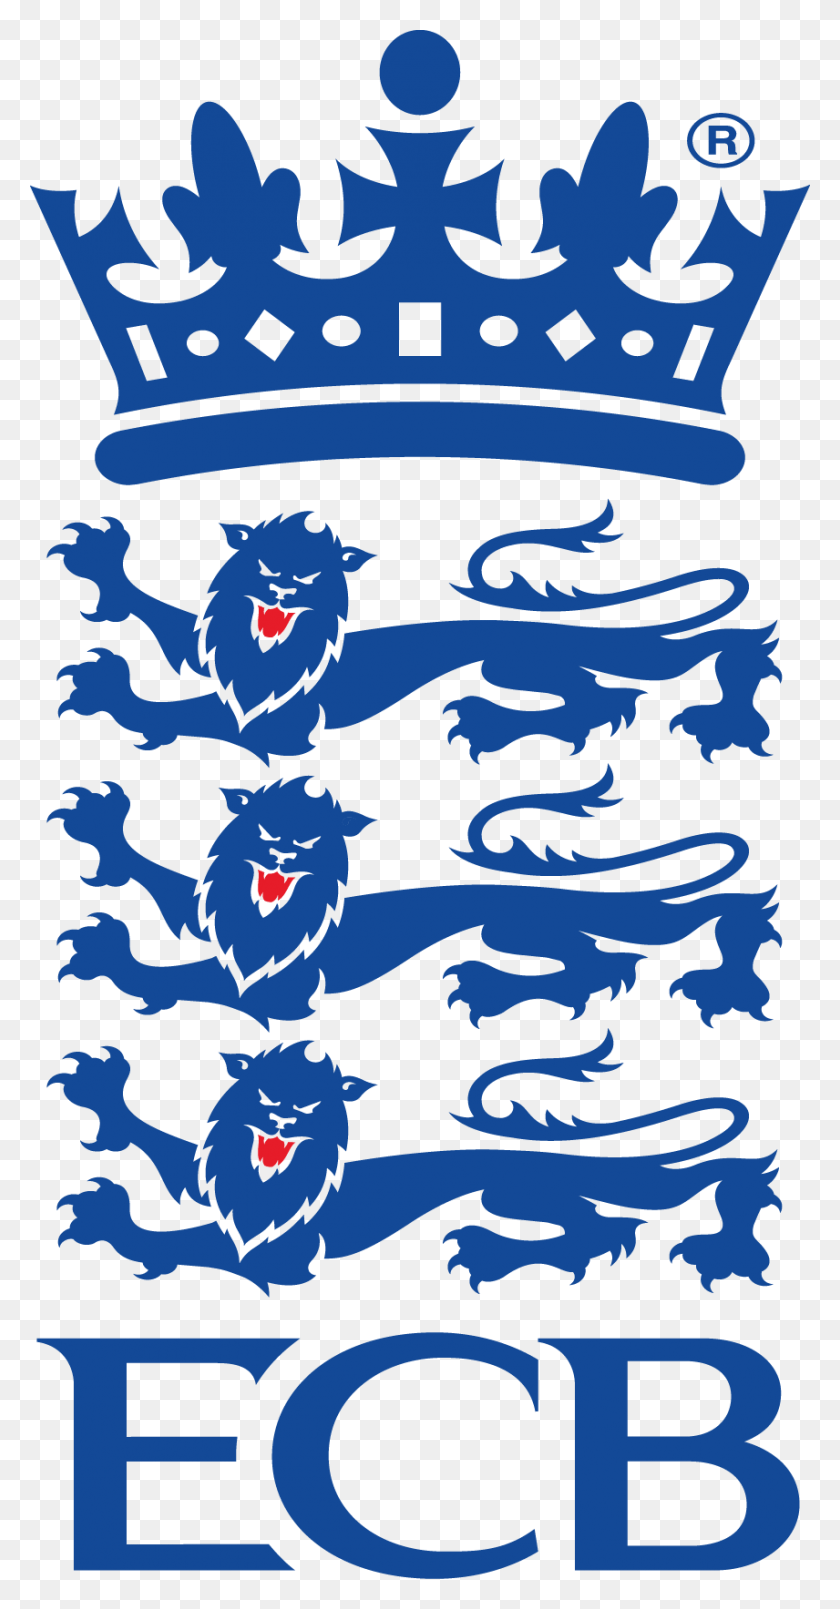 856x1701 Логотип Ecb Англия И Уэльс Доска Для Крикета Доска Для Крикета Англии И Уэльса Ecb, Плакат, Реклама, Дракон Hd Png Скачать